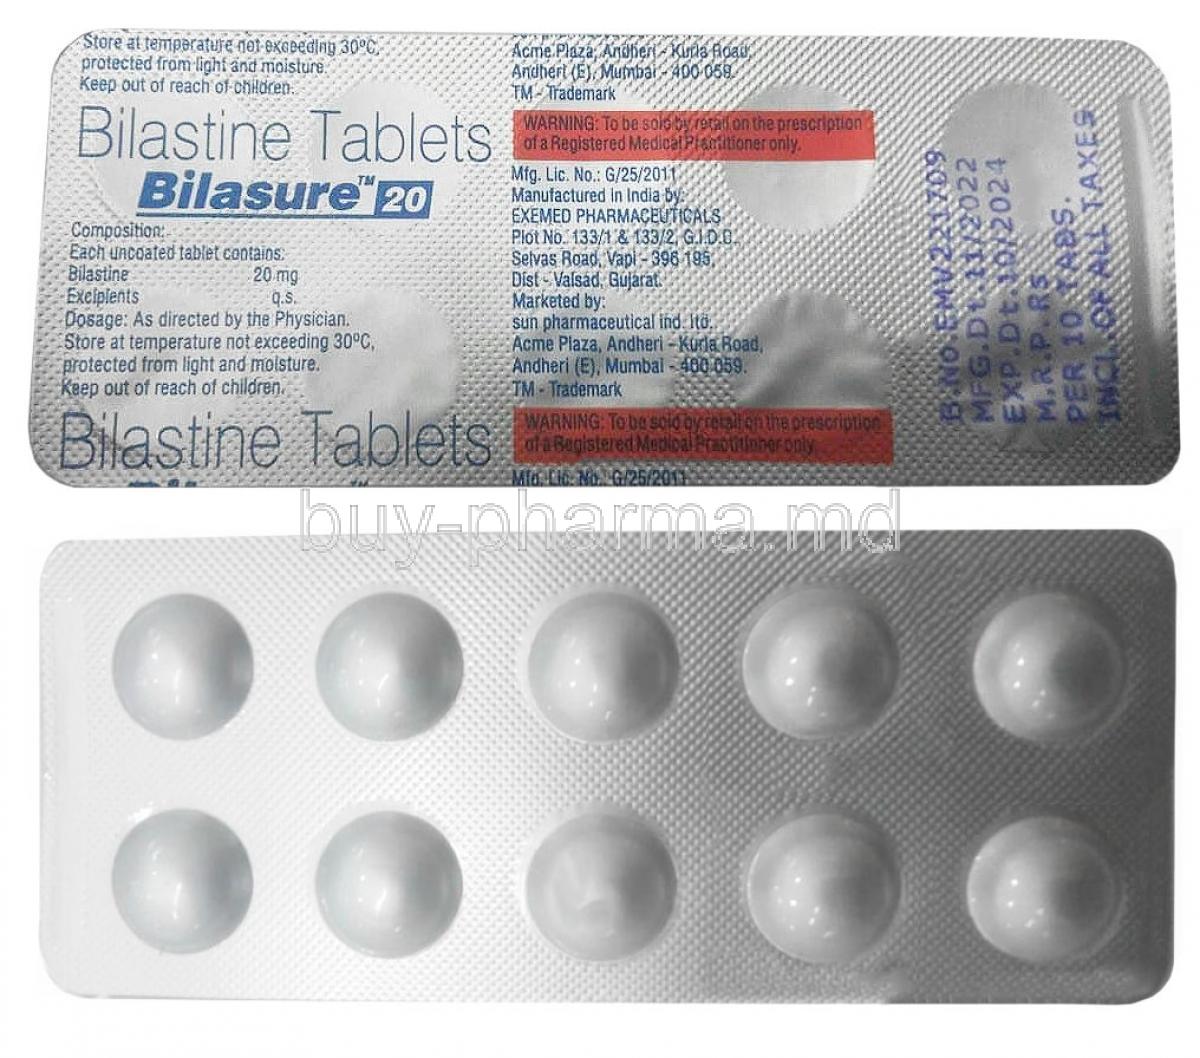 Bilasure 20, Bilastine 20 mg, Sun Pharmaceutical Industries, Blisterpack front view, back view